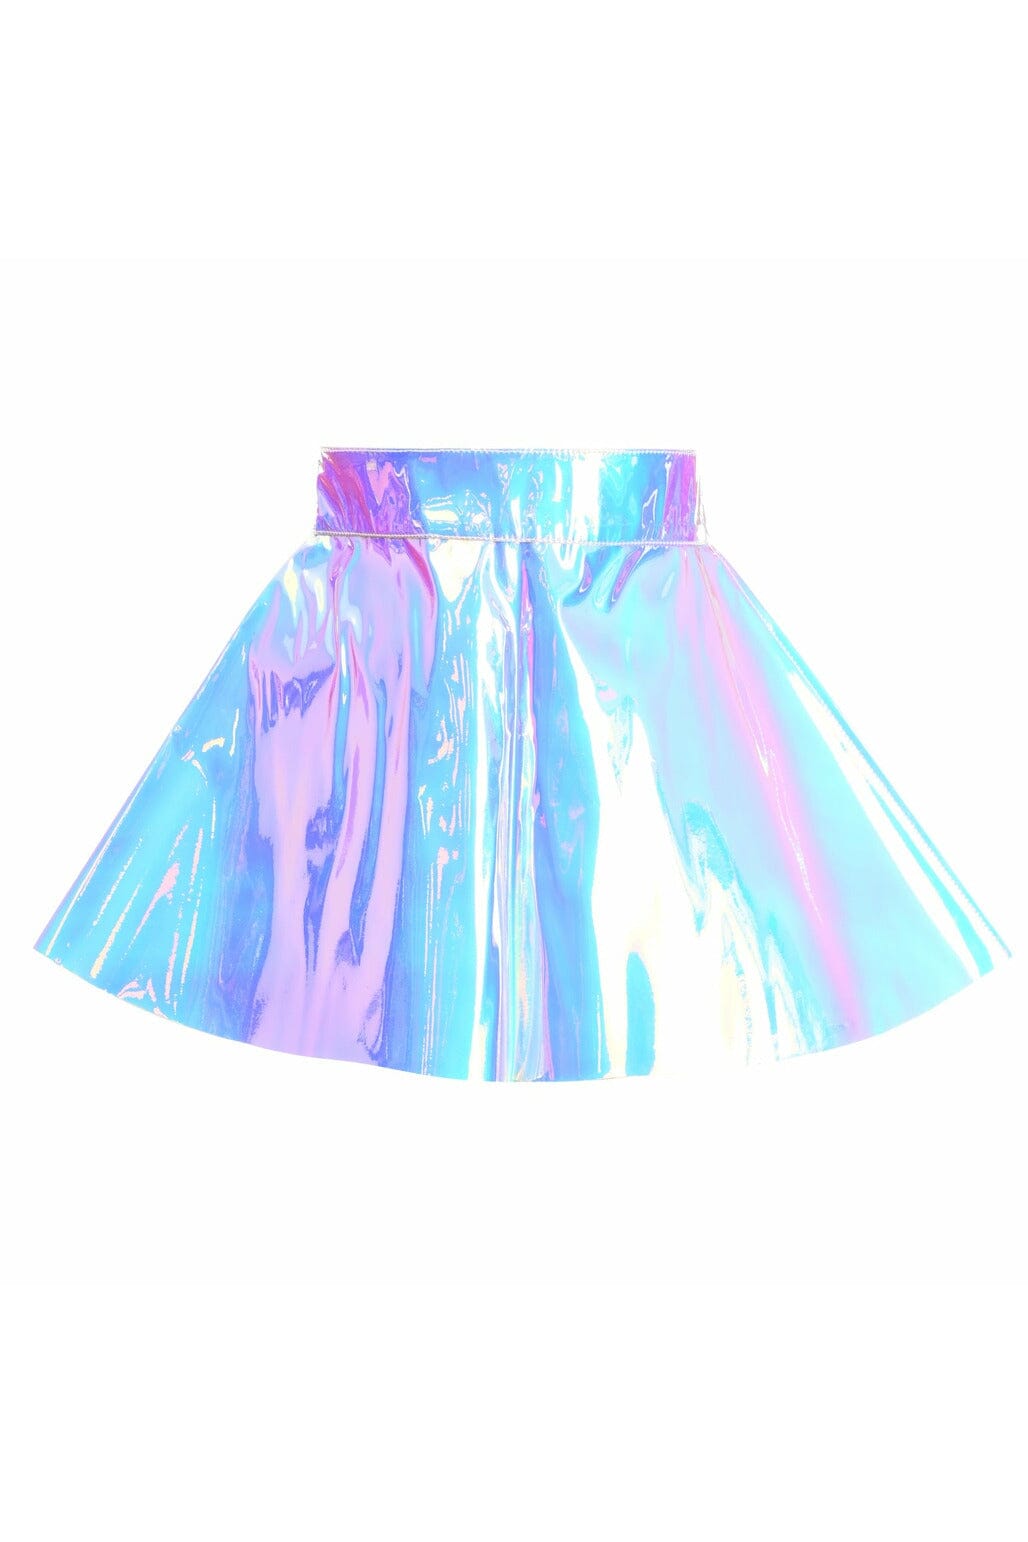 Blue/Purple Holo Skater Skirt-Mini Skirts-Daisy Corsets-Hologram-S-SEXYSHOES.COM